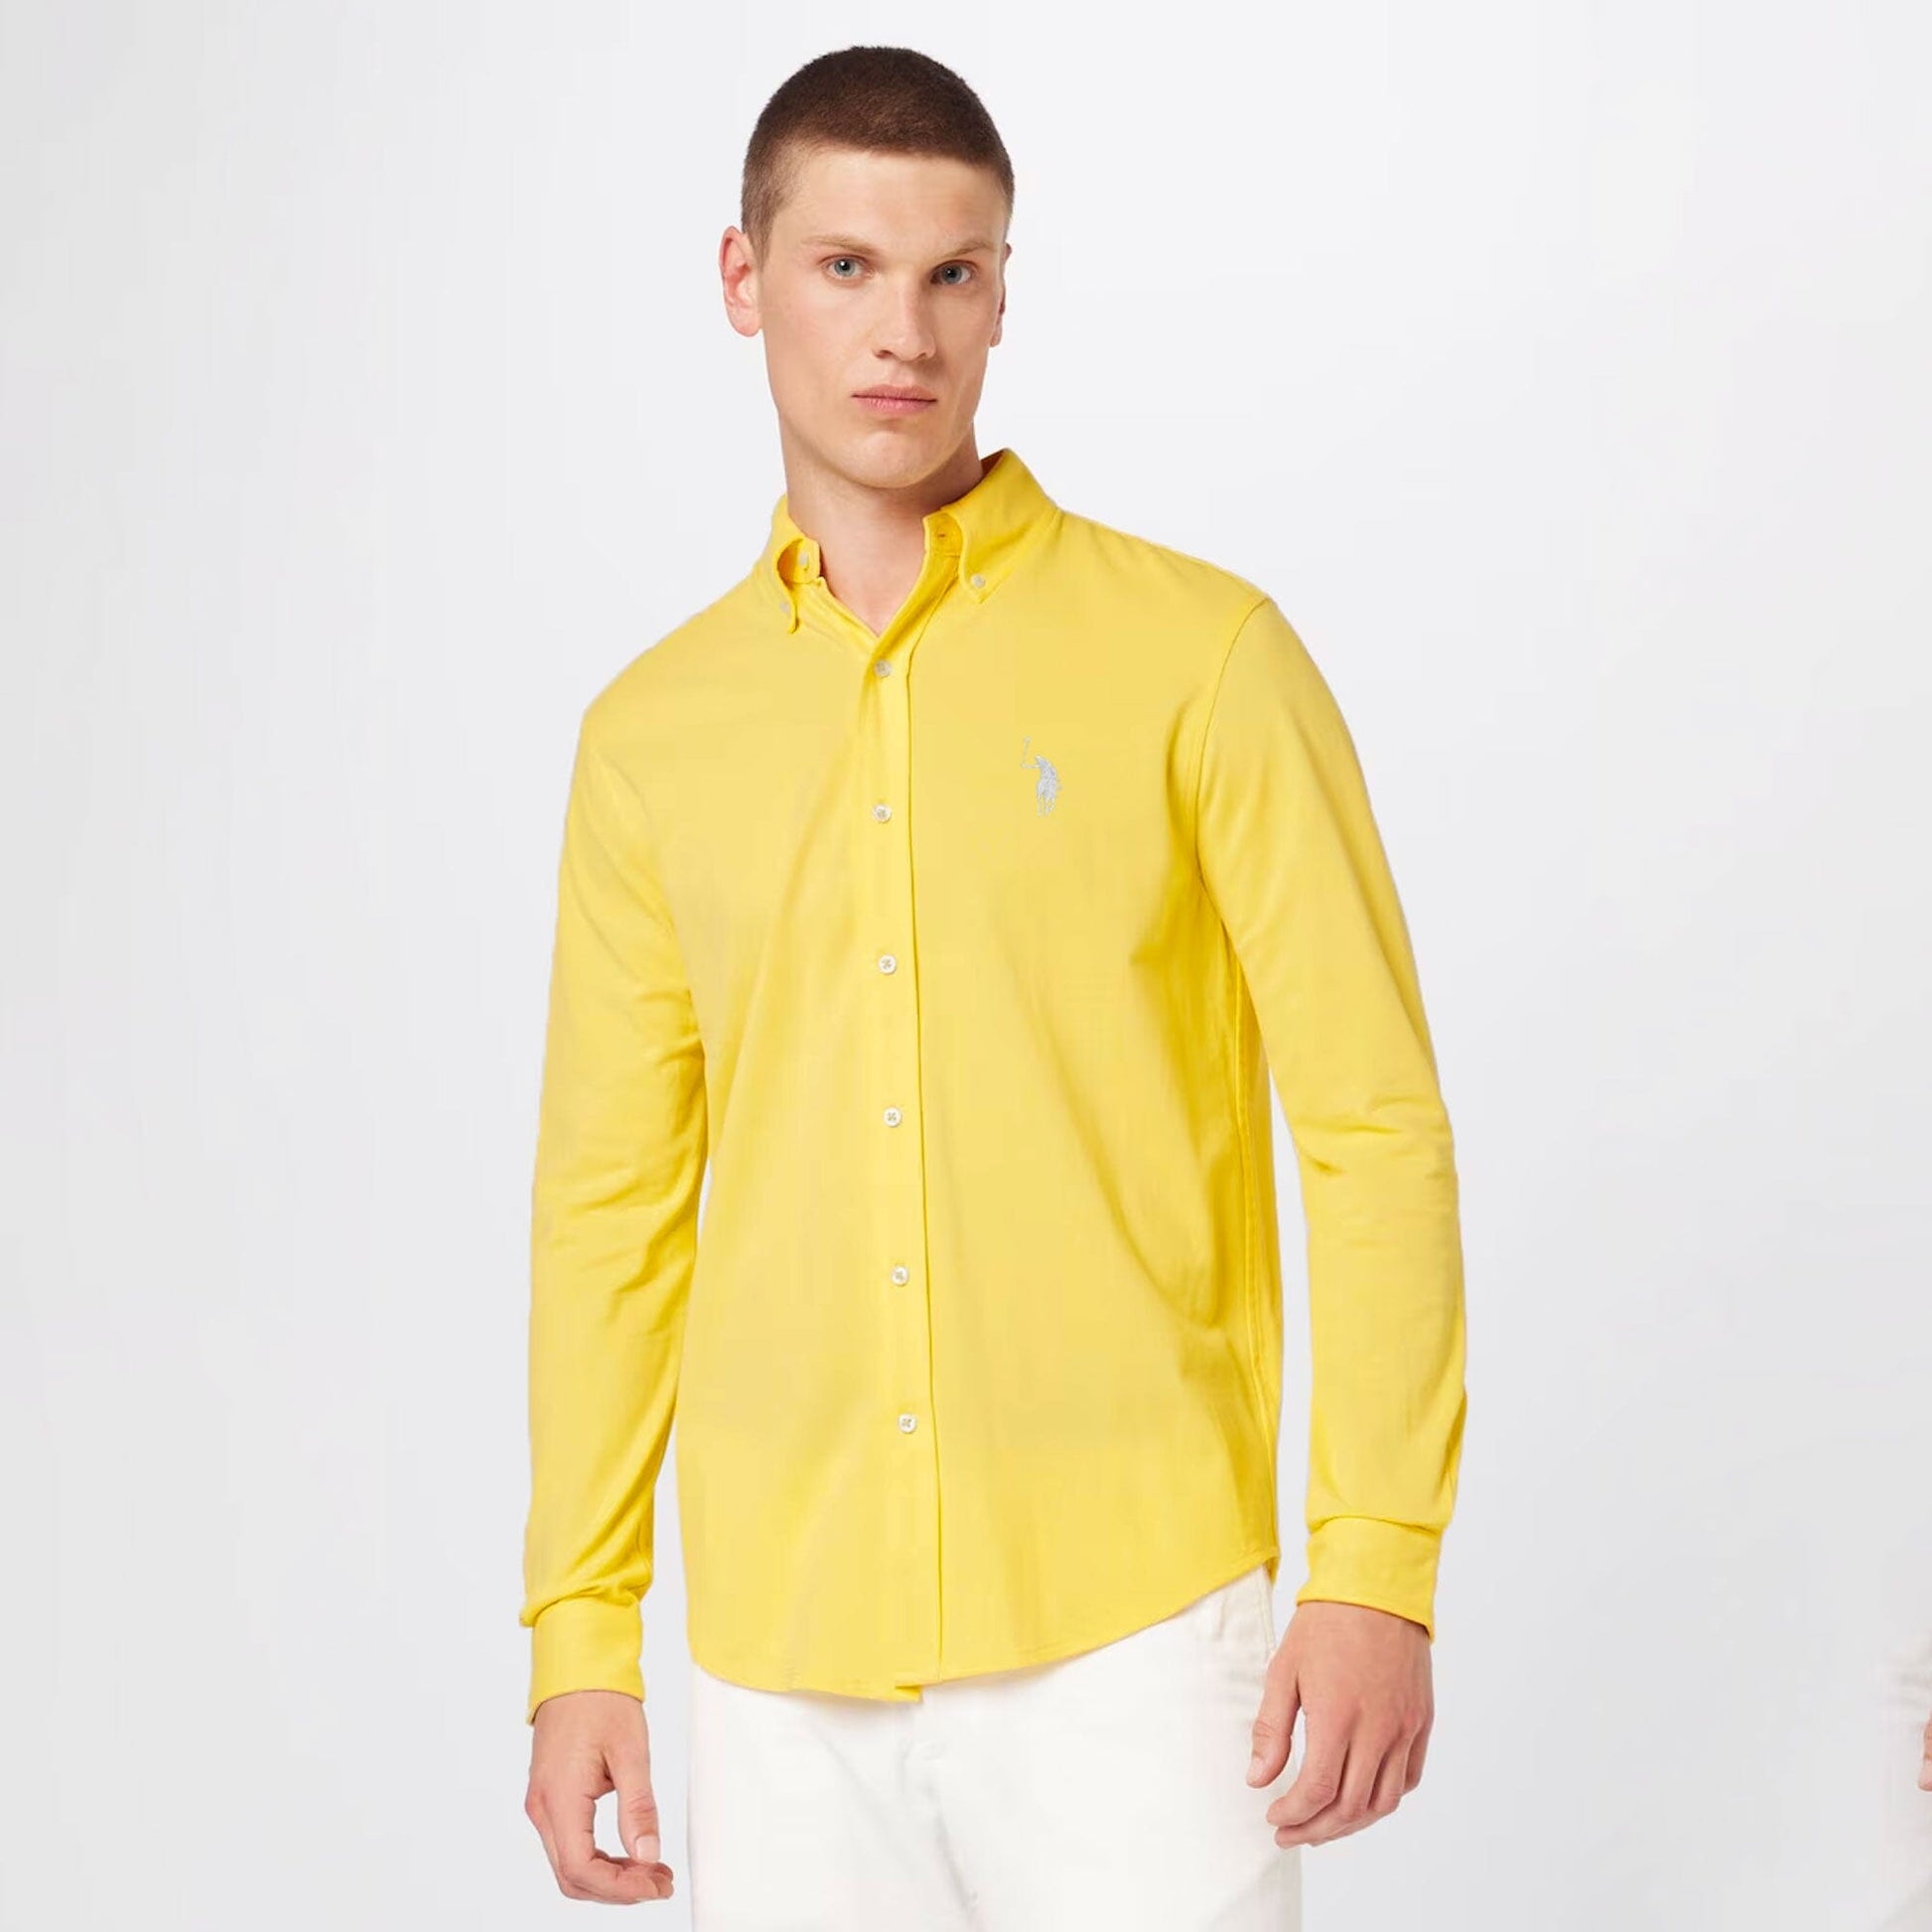 Polo Republica Men's Essentials Knitted Casual Shirt Men's Casual Shirt Polo Republica Yellow S 